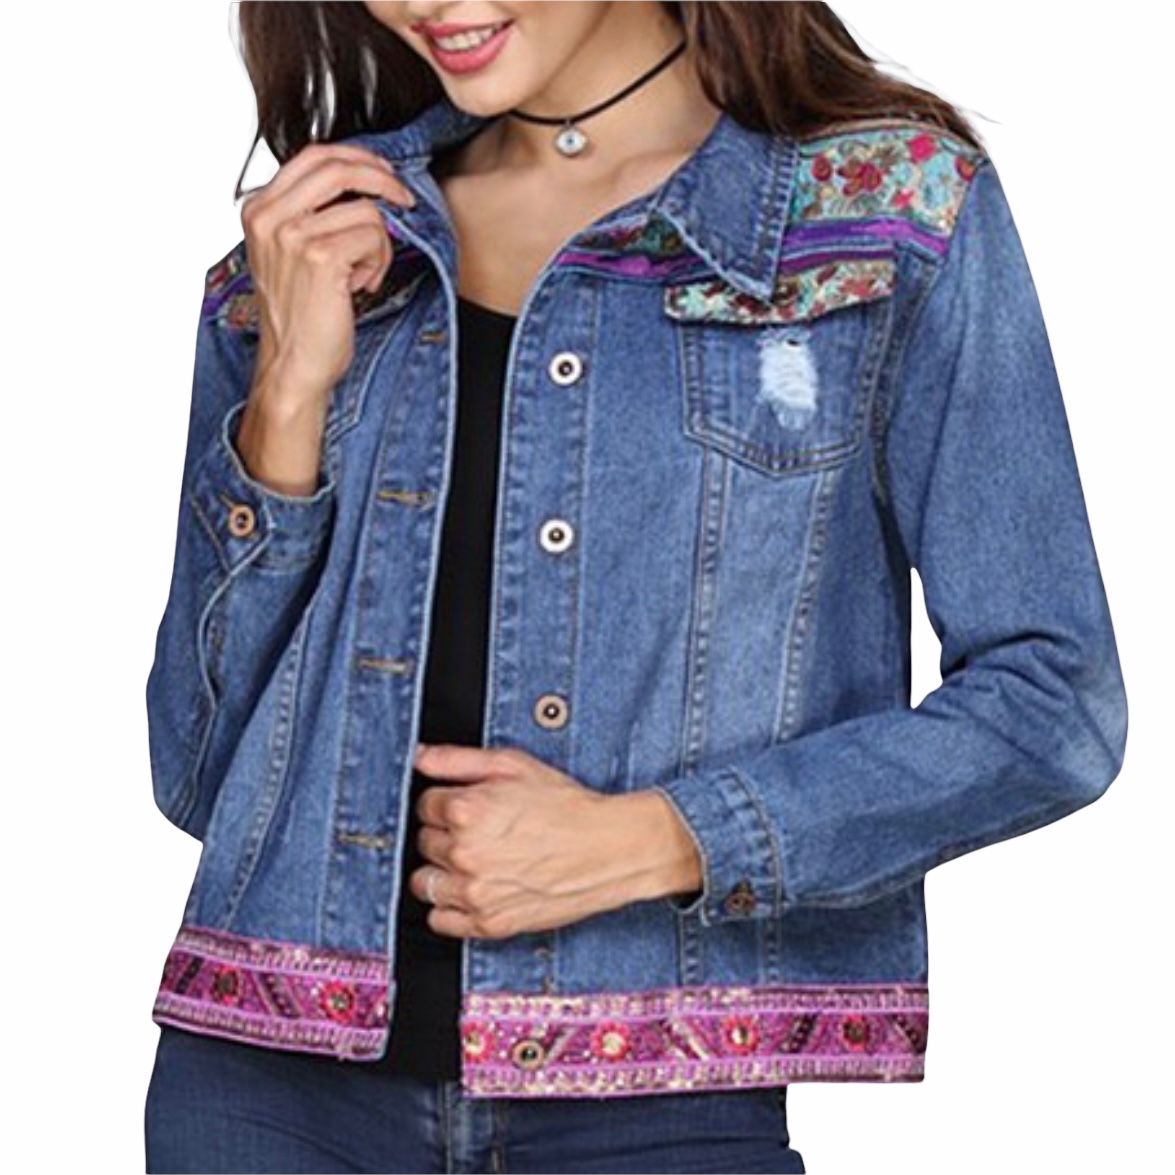 Velzera Aztec embroidered back destroyed Denim jean Jacket  jean jacket's ribbon trim and embellished yoke  100% cotton  20.5” across underarms  21” s